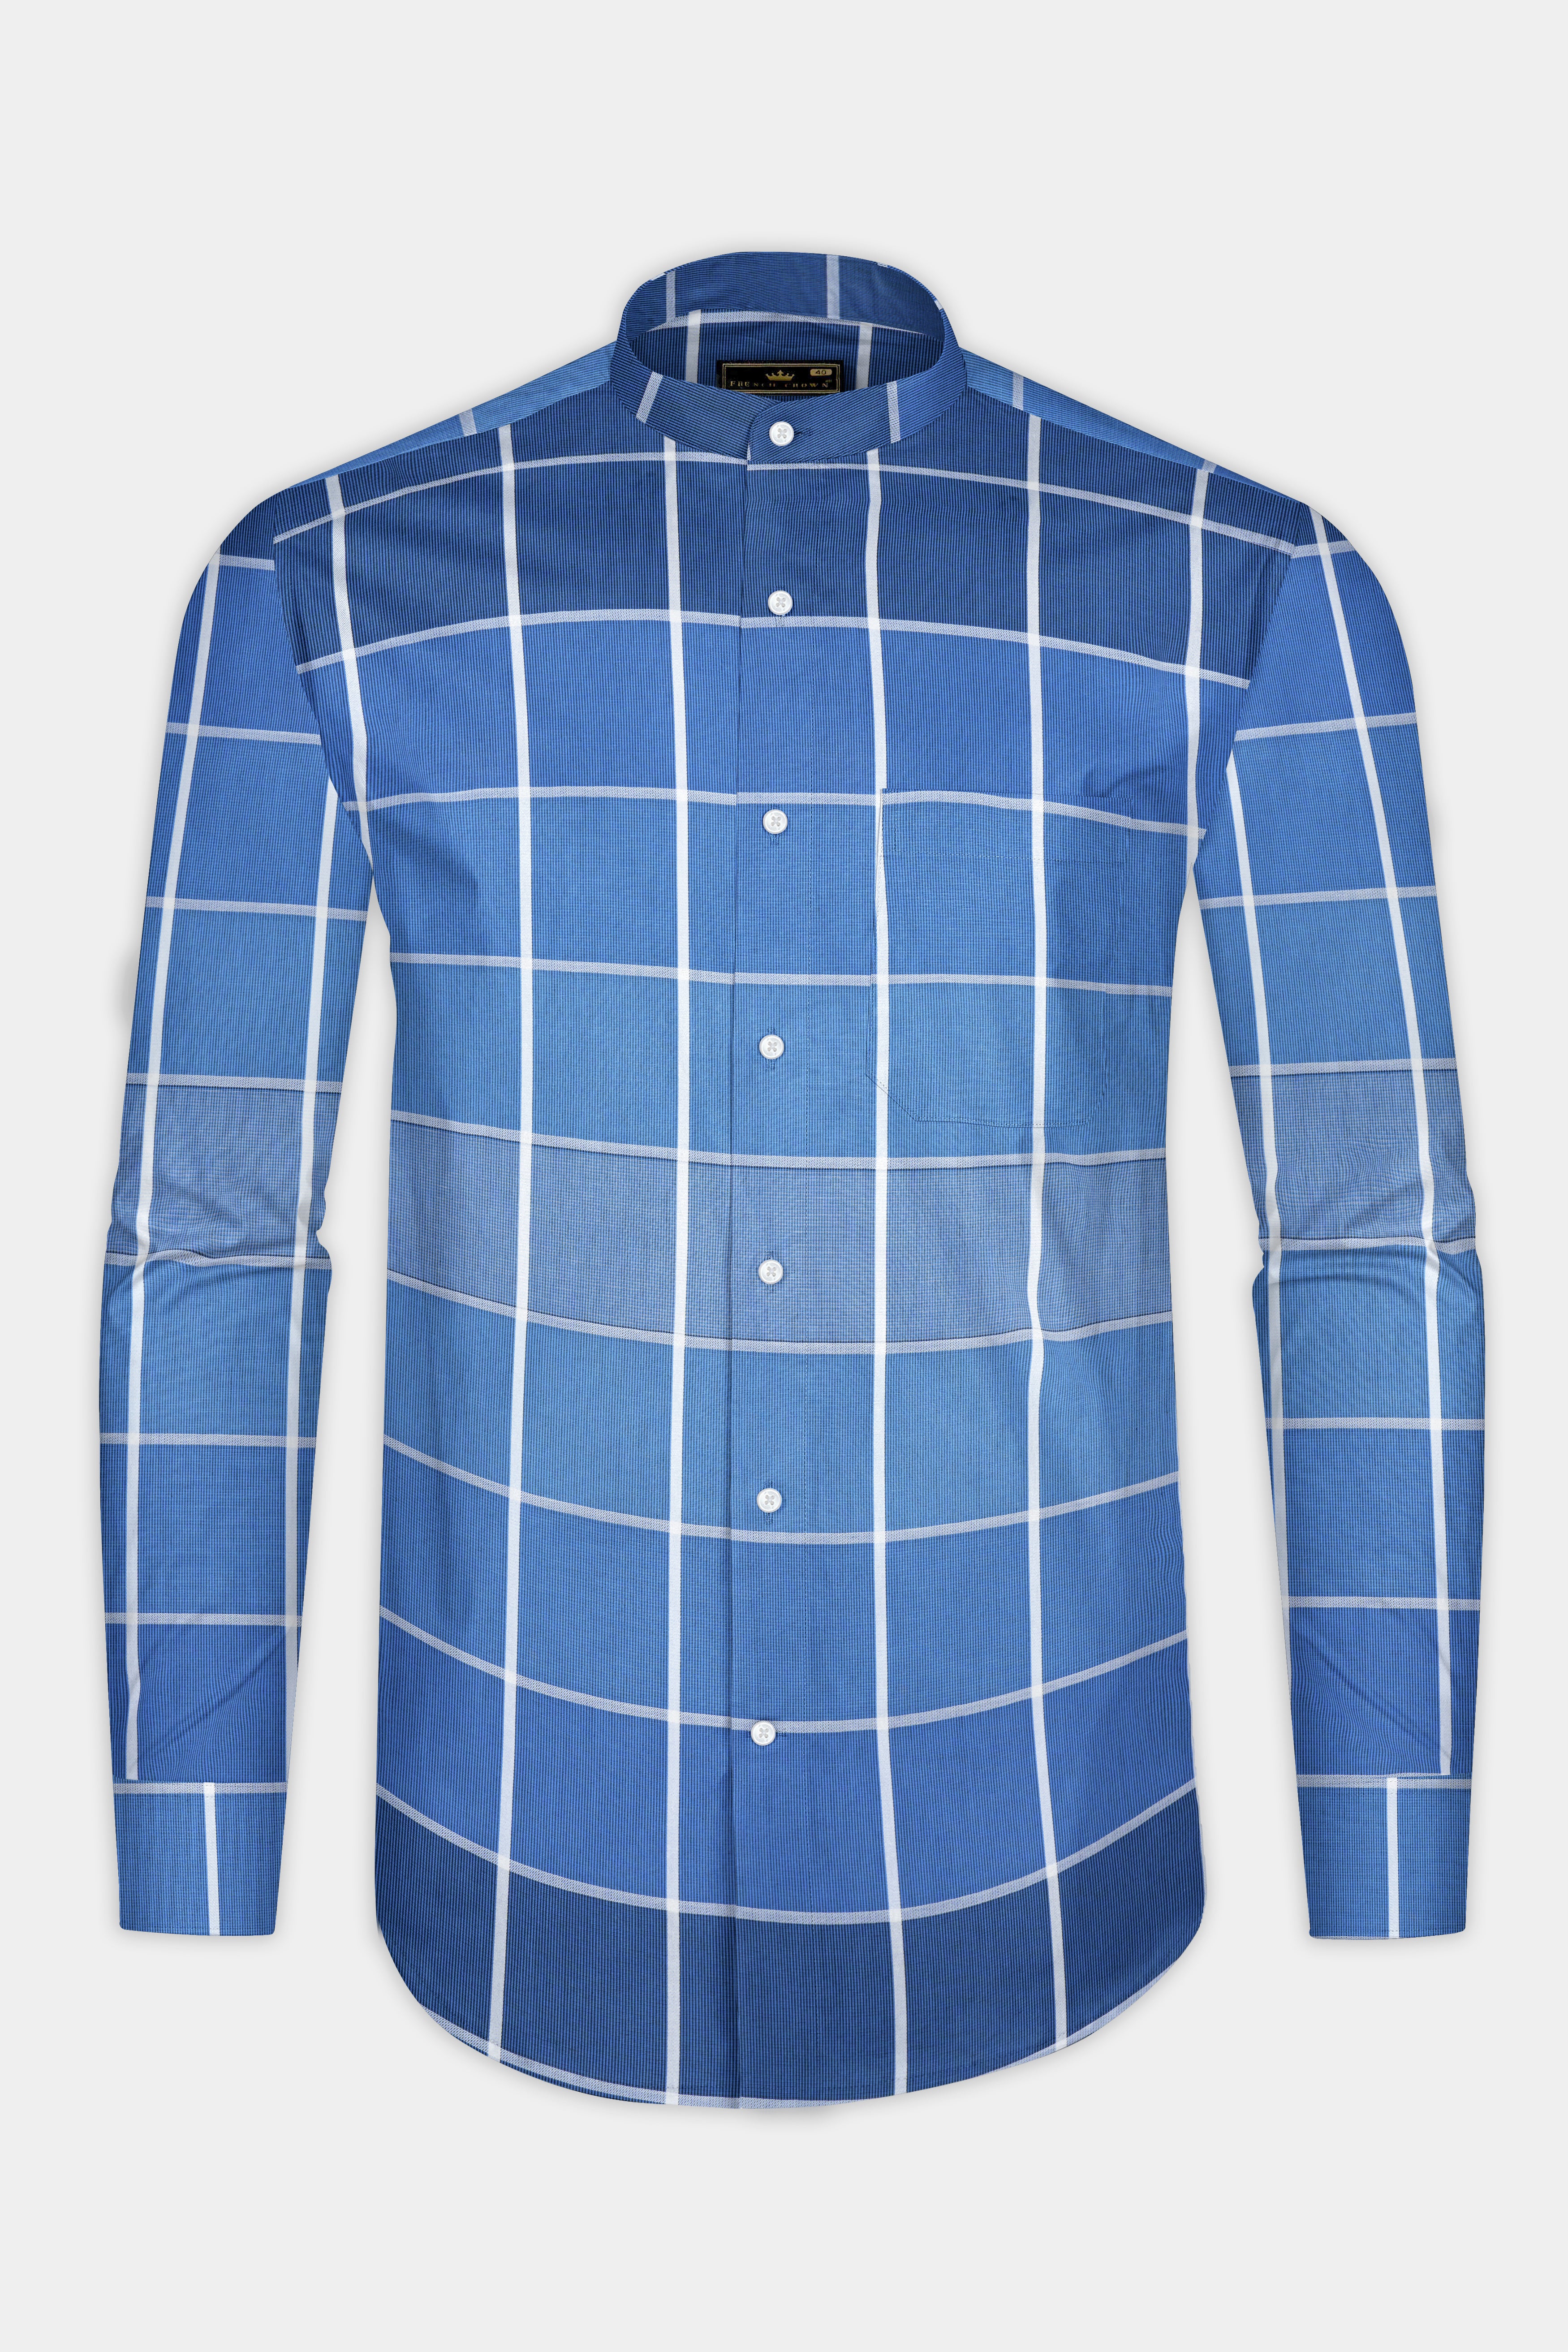 Fun Blue and White Windowpane Premium Cotton Shirt